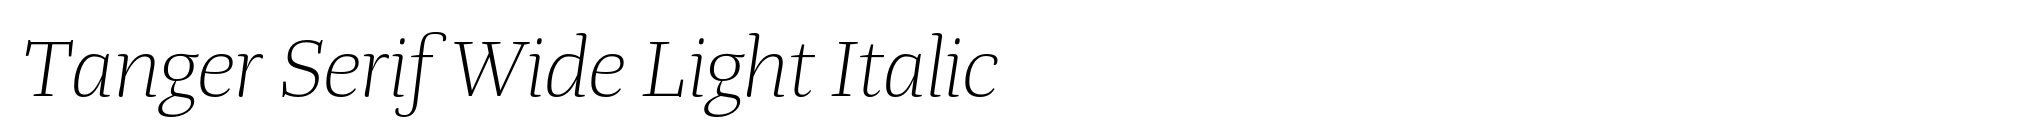 Tanger Serif Wide Light Italic image